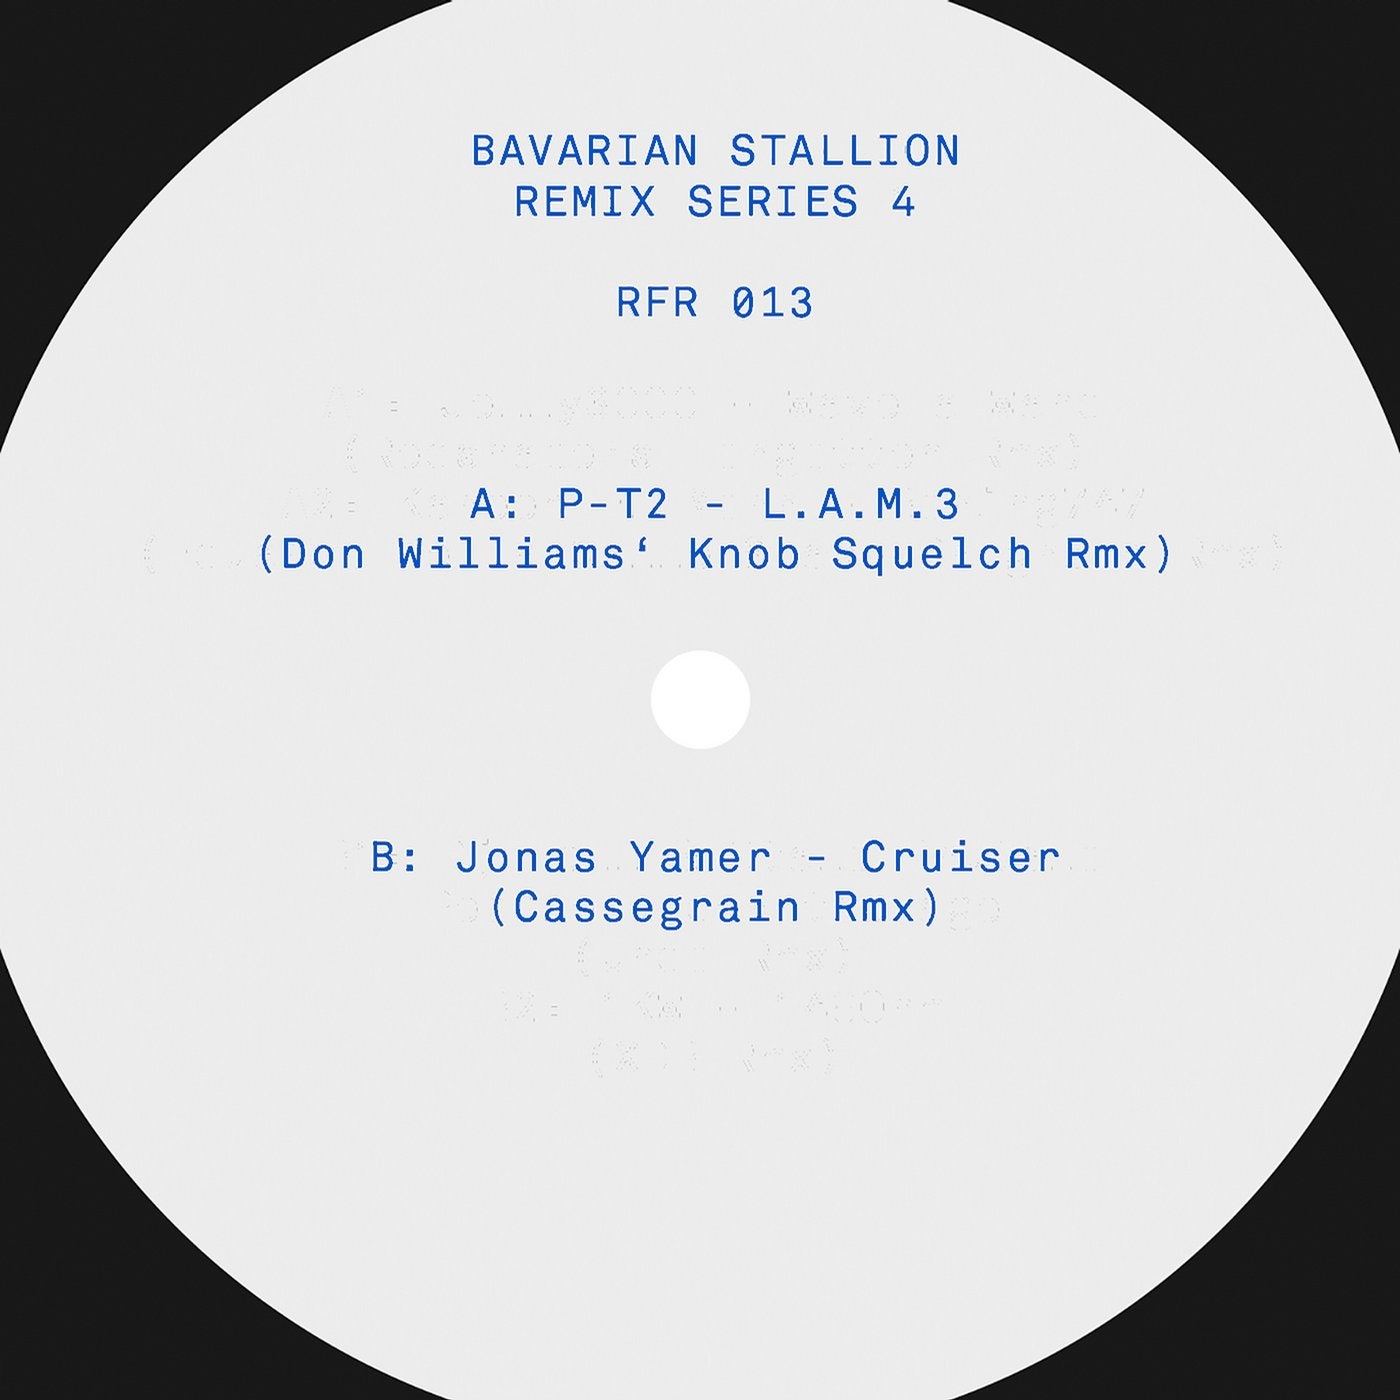 Bavarian Stallion Remix Series 4